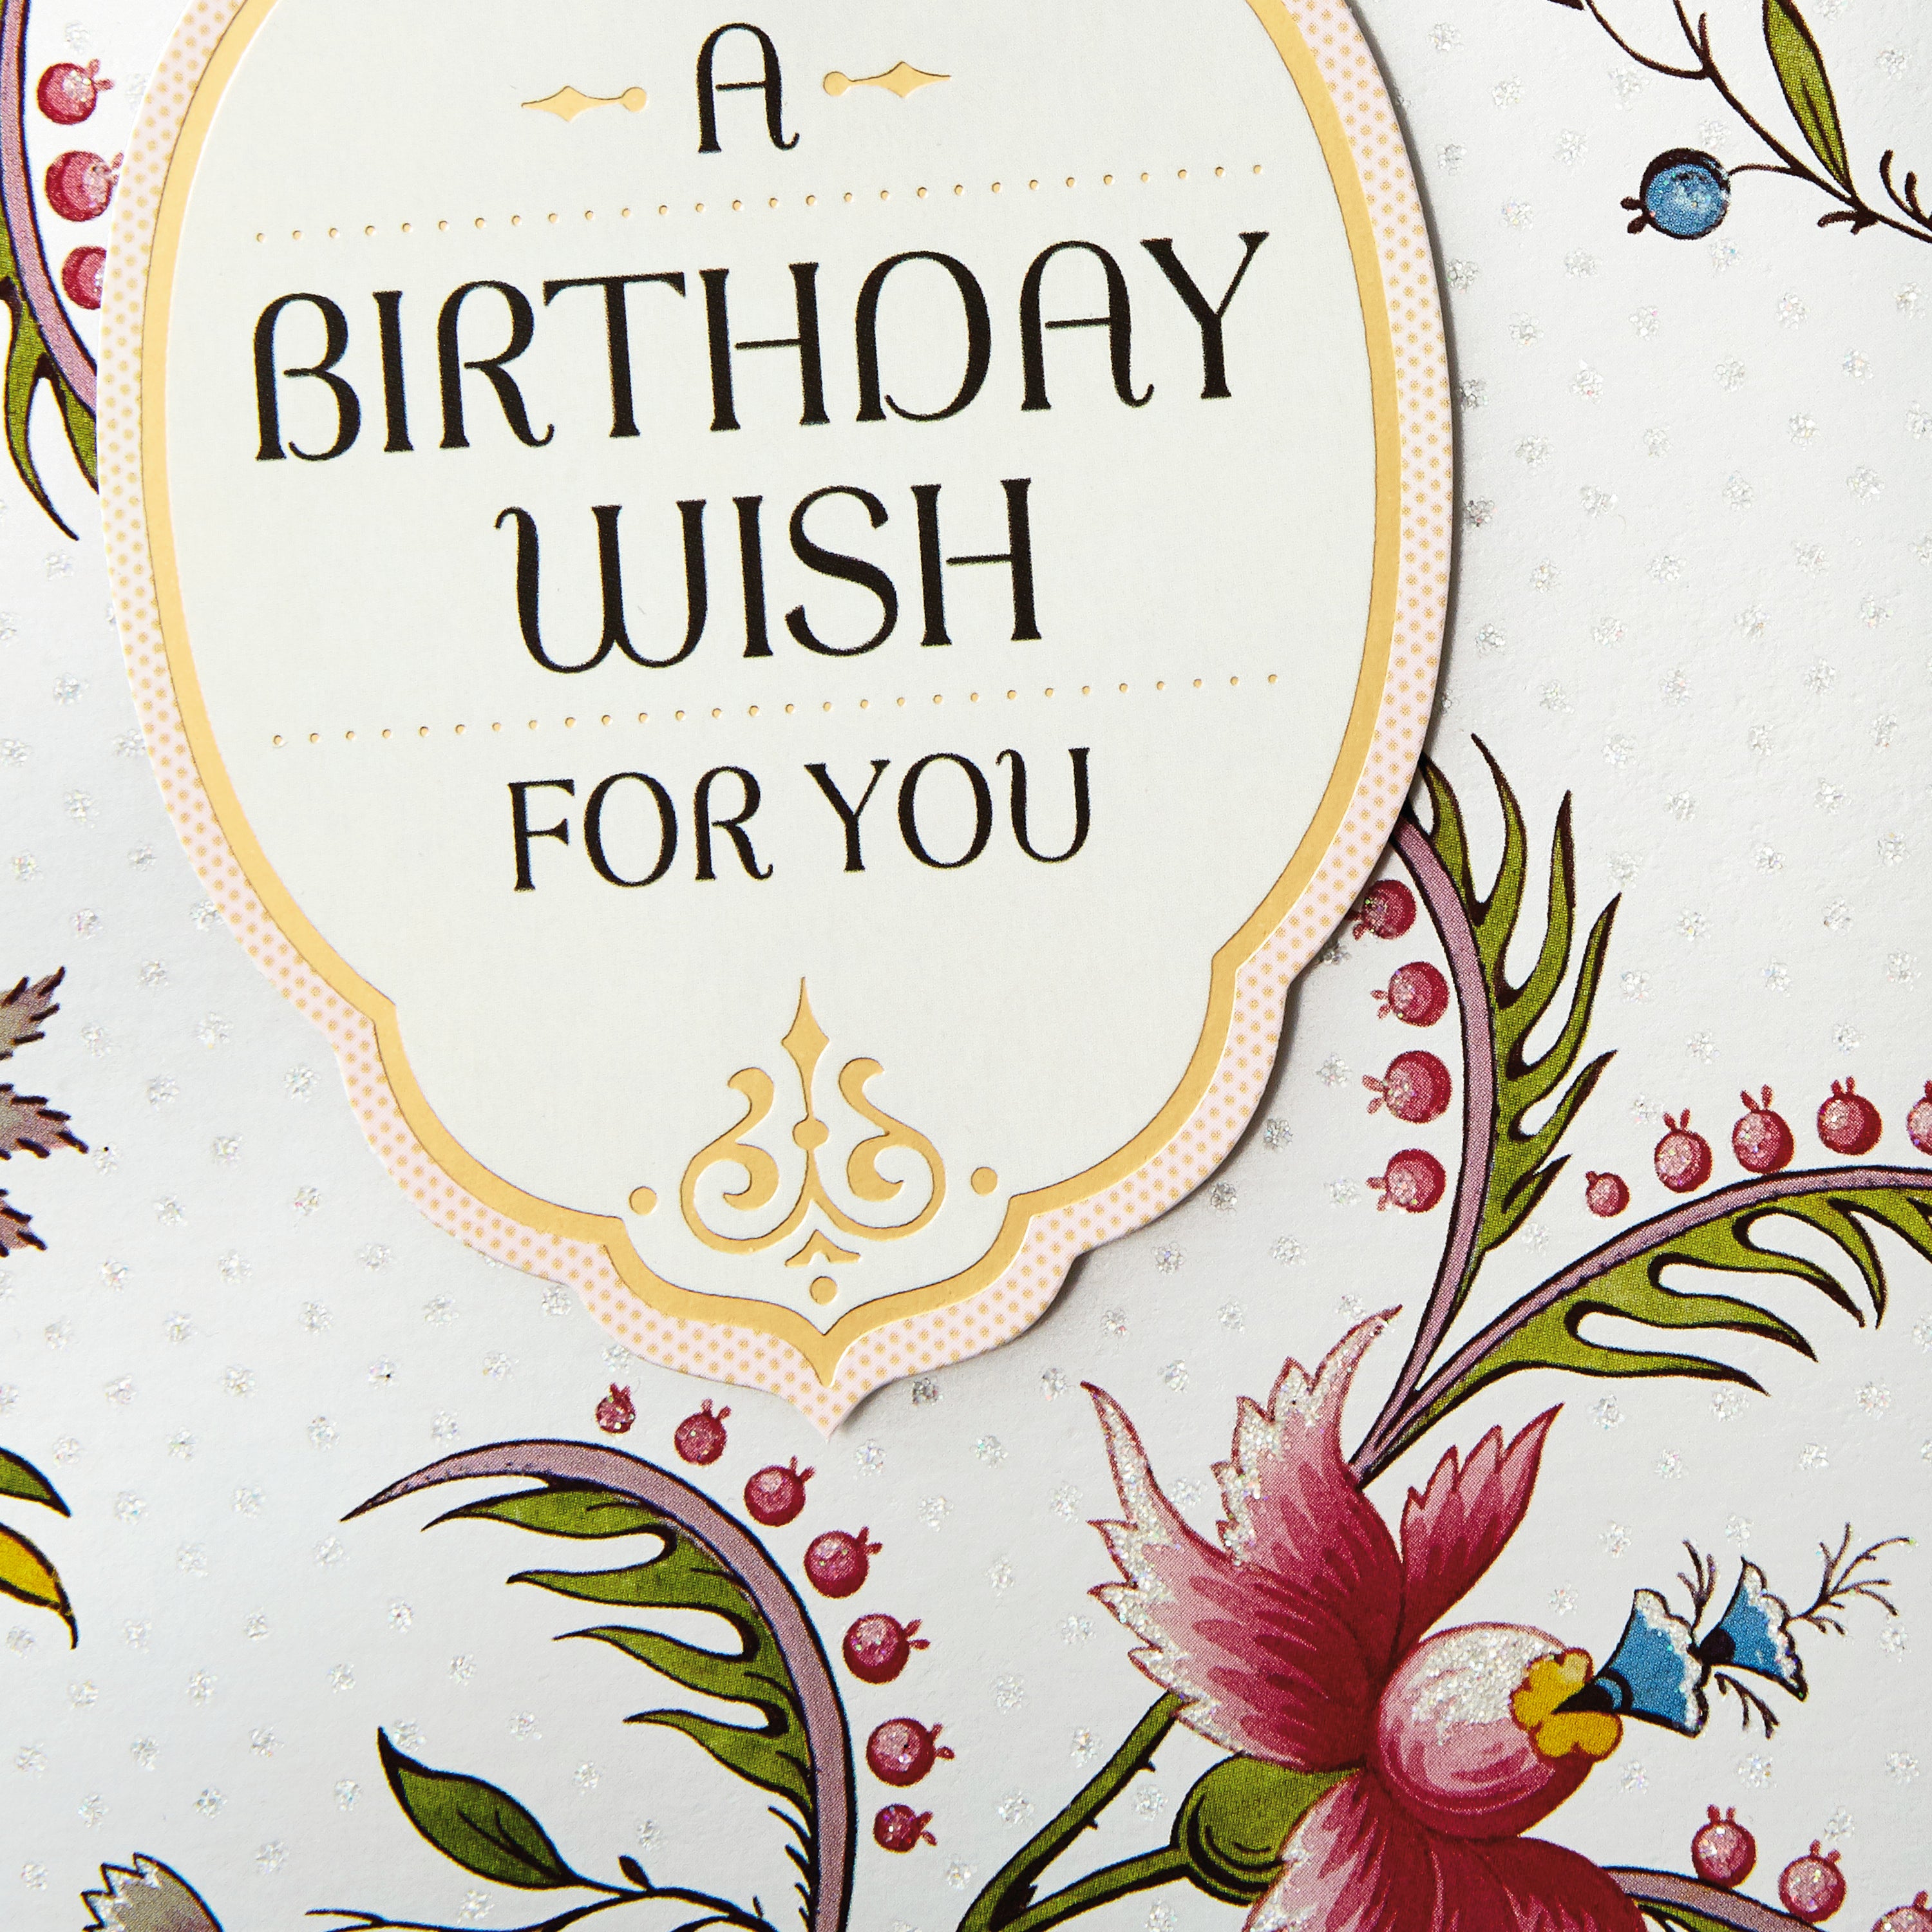 Golden Thread Birthday Card (A Birthday Wish)